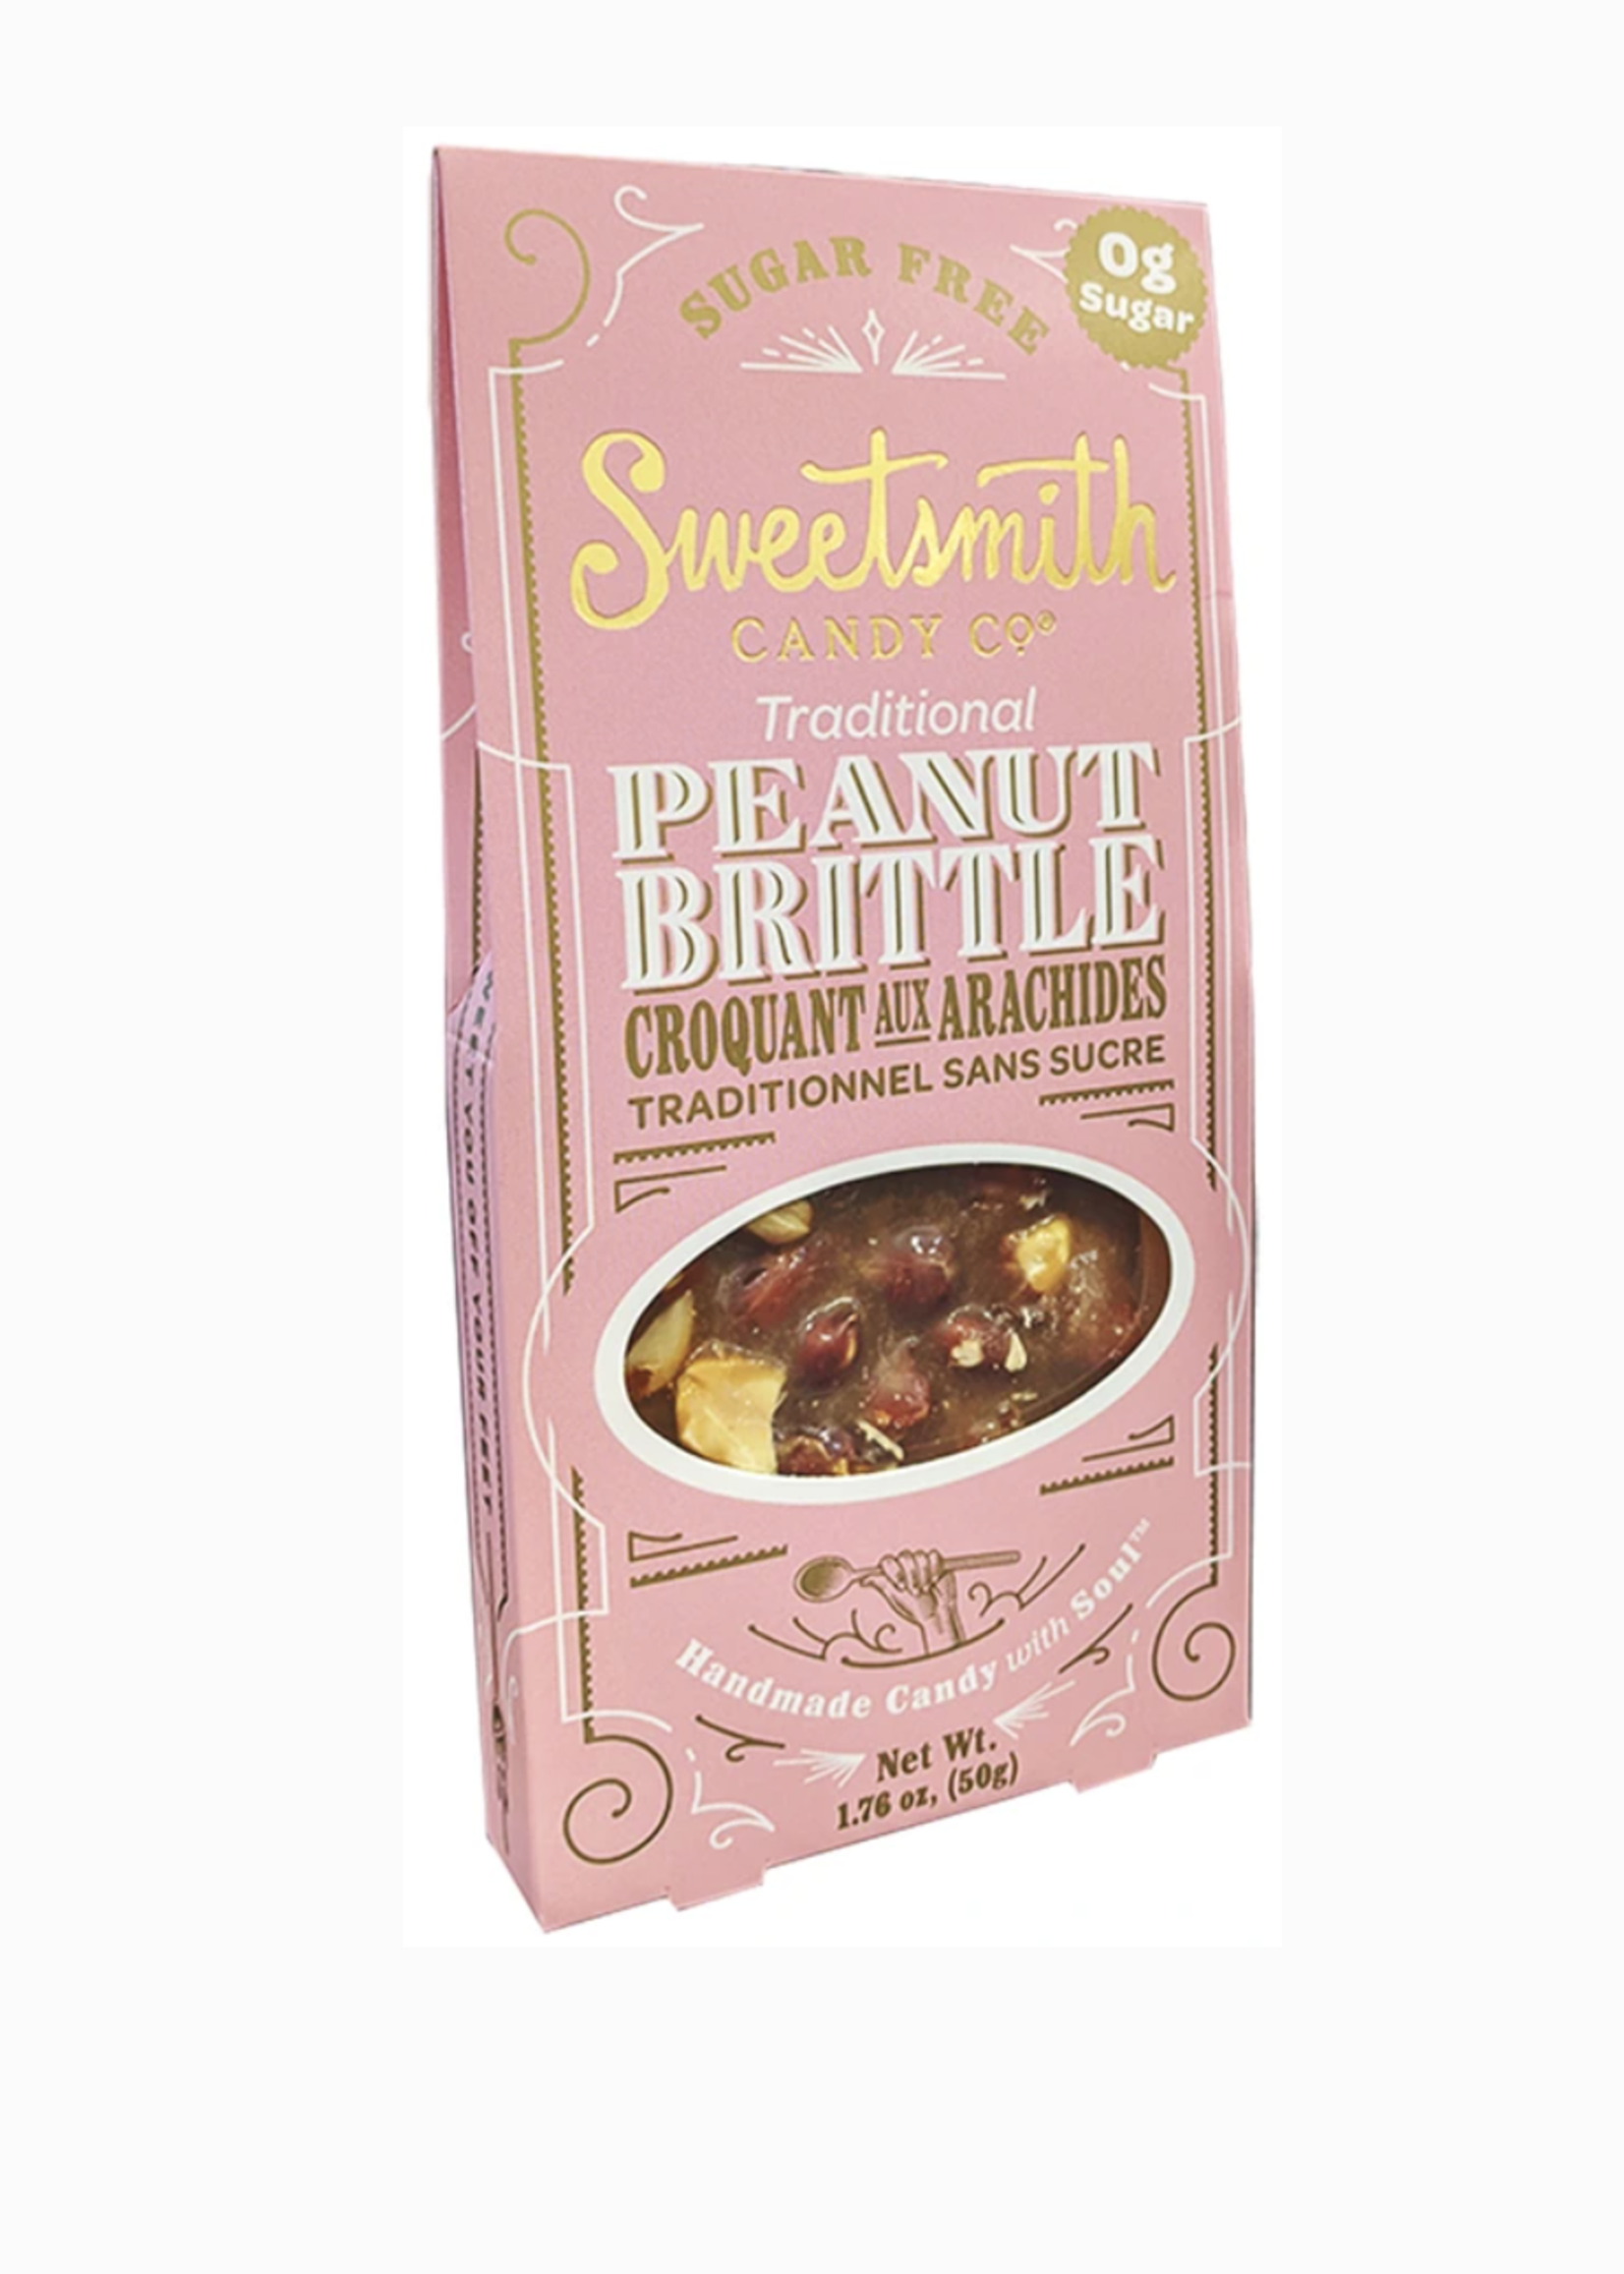 Sweetsmith Candy Co. Peanut Brittle - SUGAR FREE